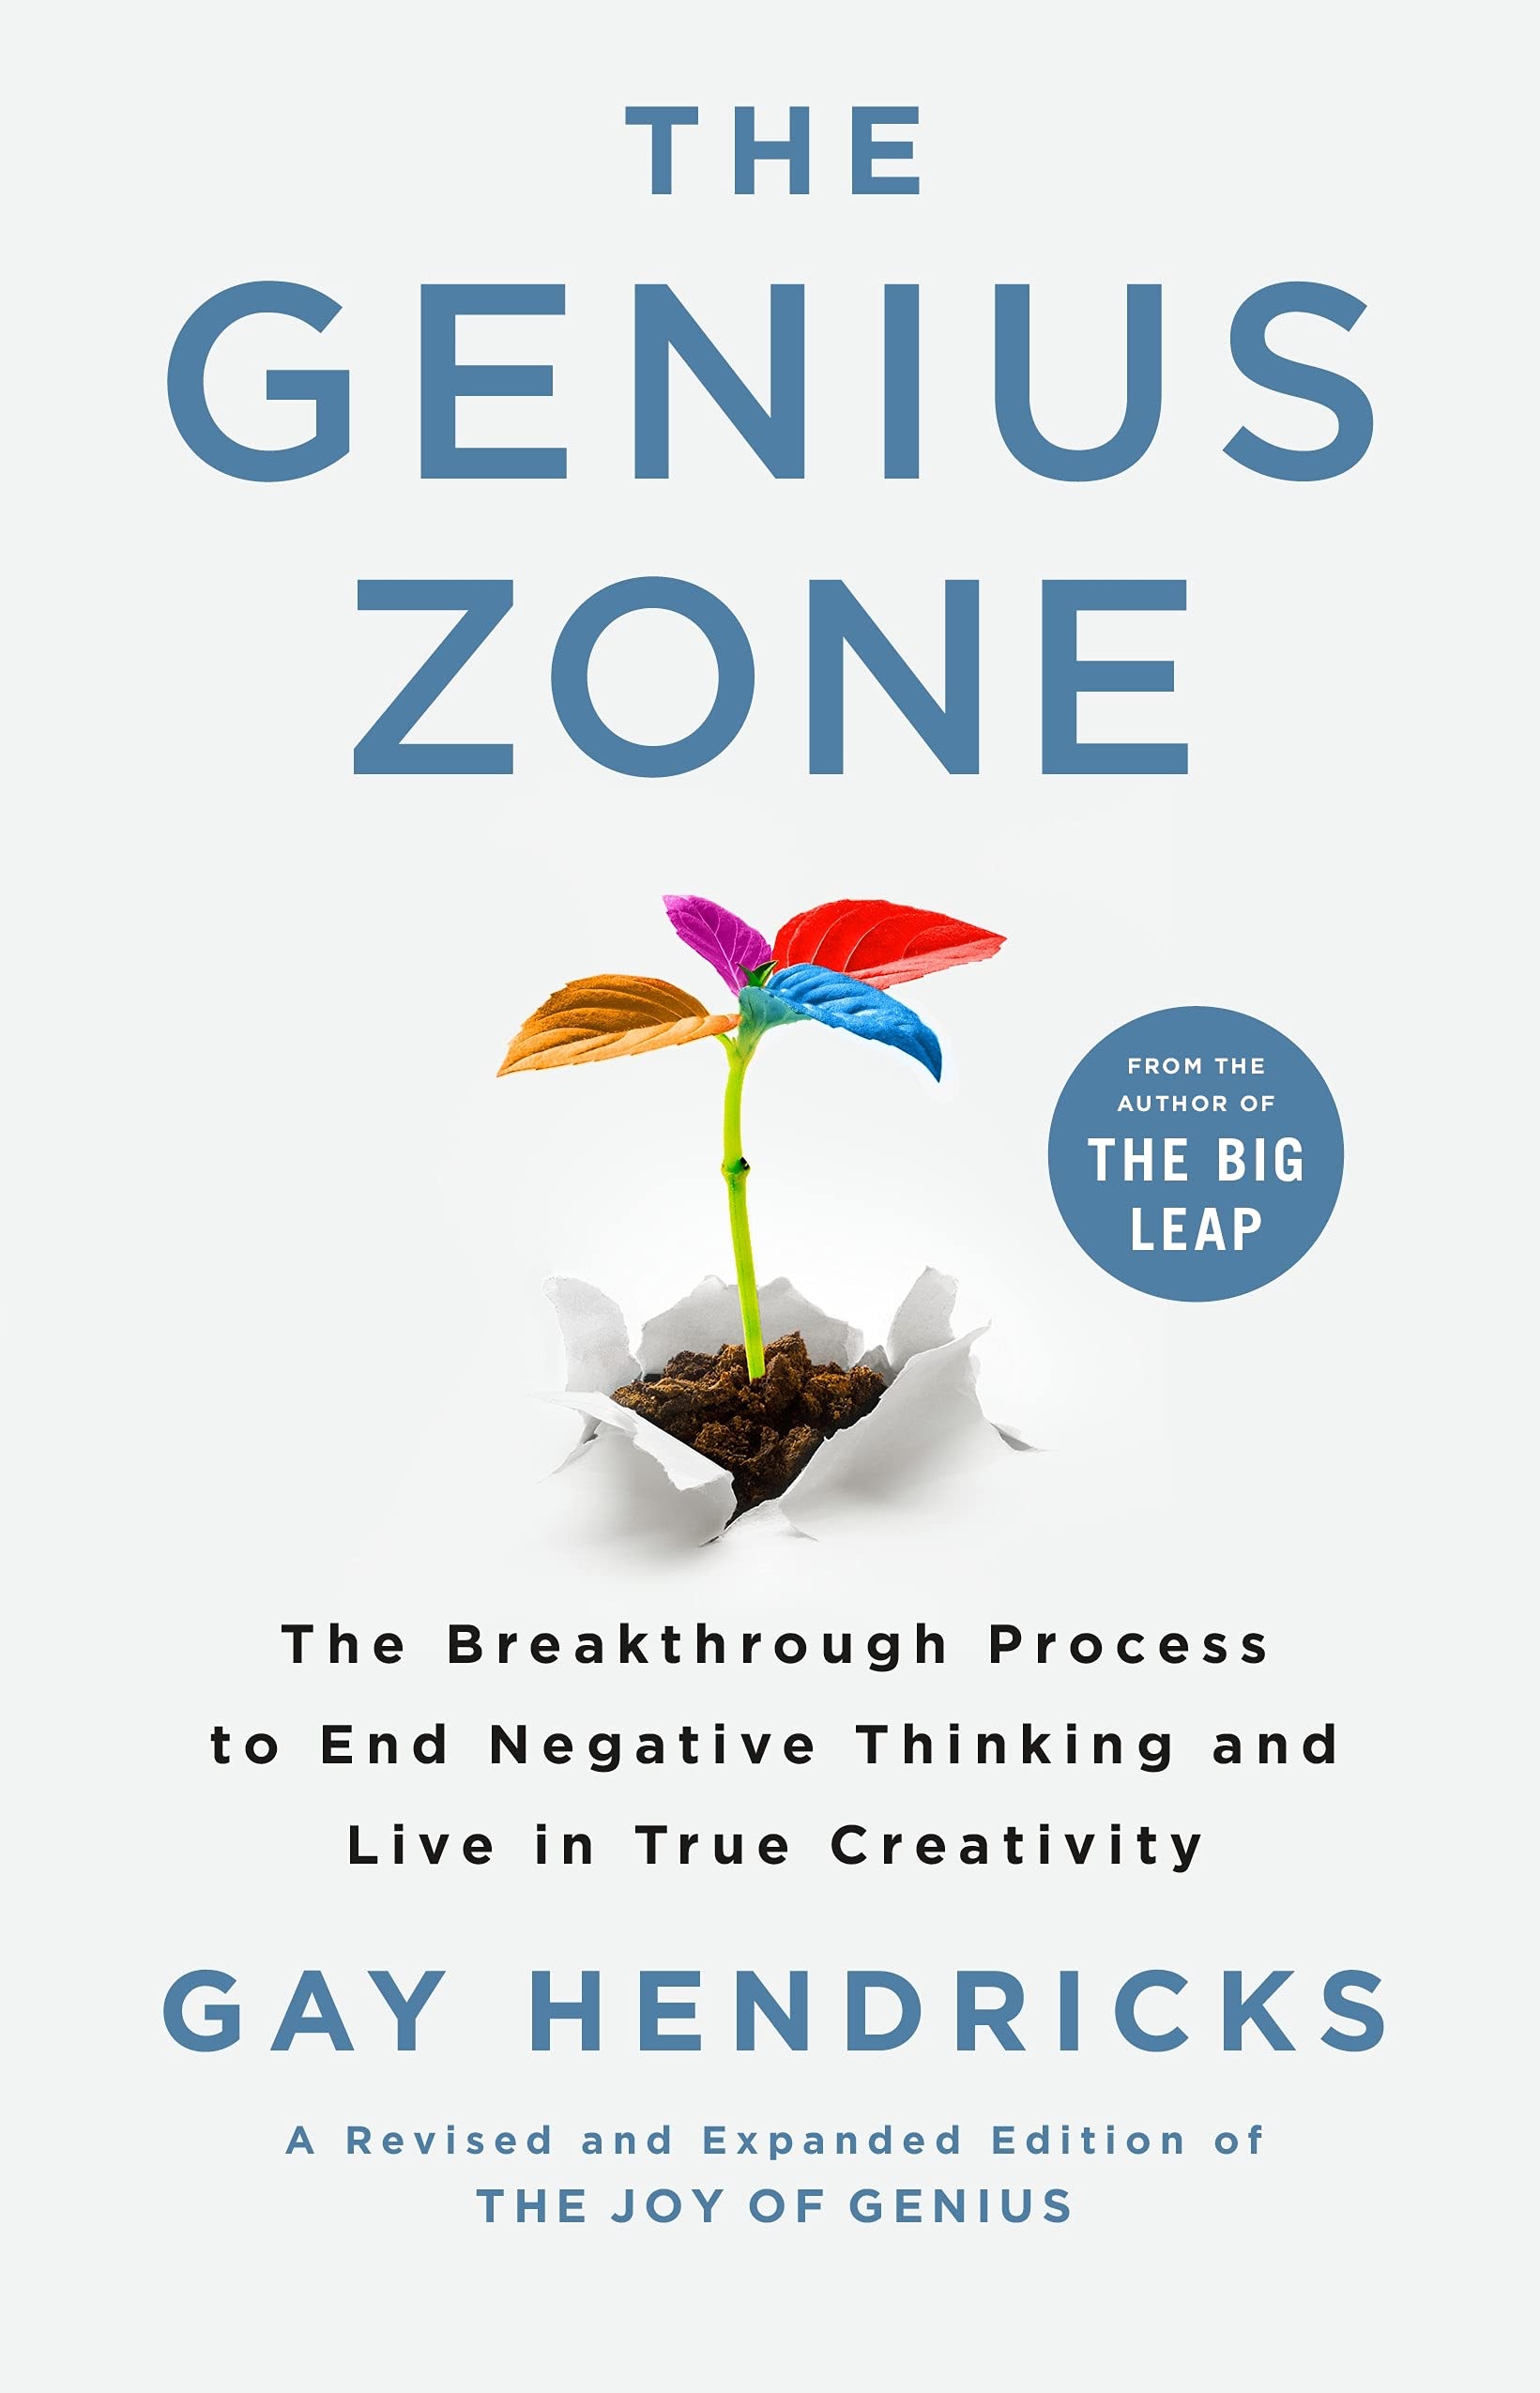 Image for "The Genius Zone"